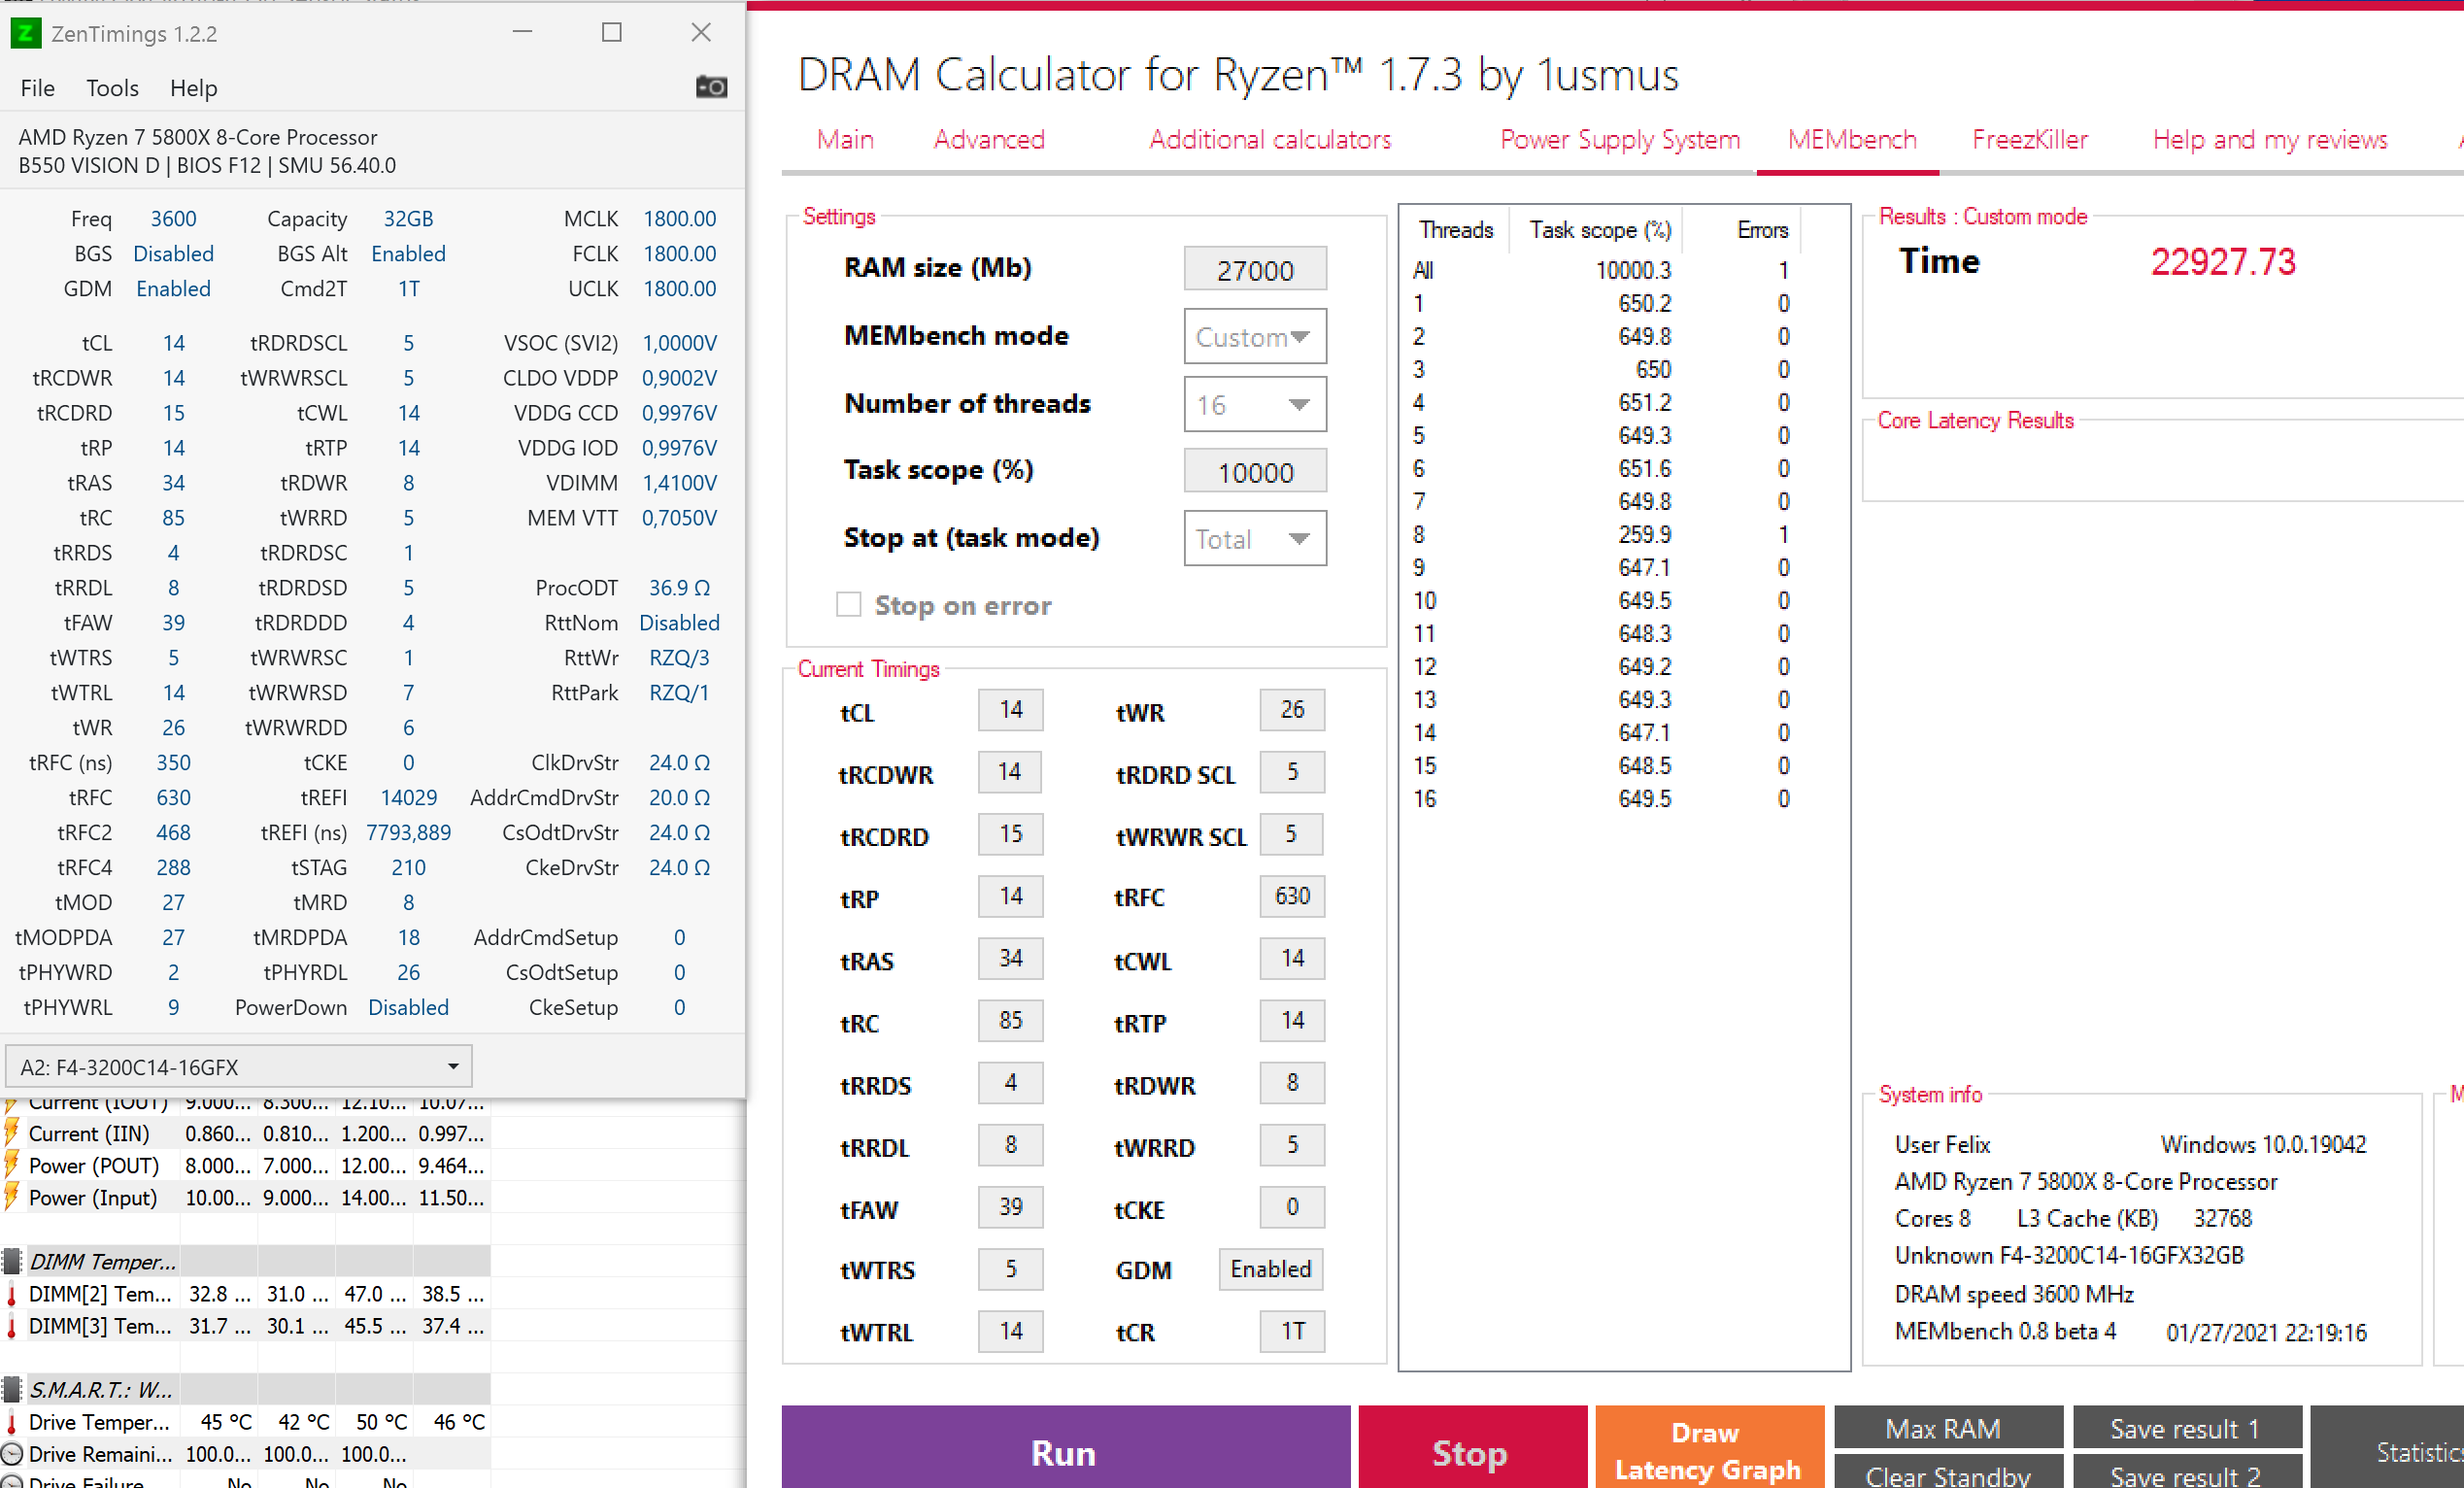 2021-01-28 13_25_55-DRAM Calculator for Ryzen.png